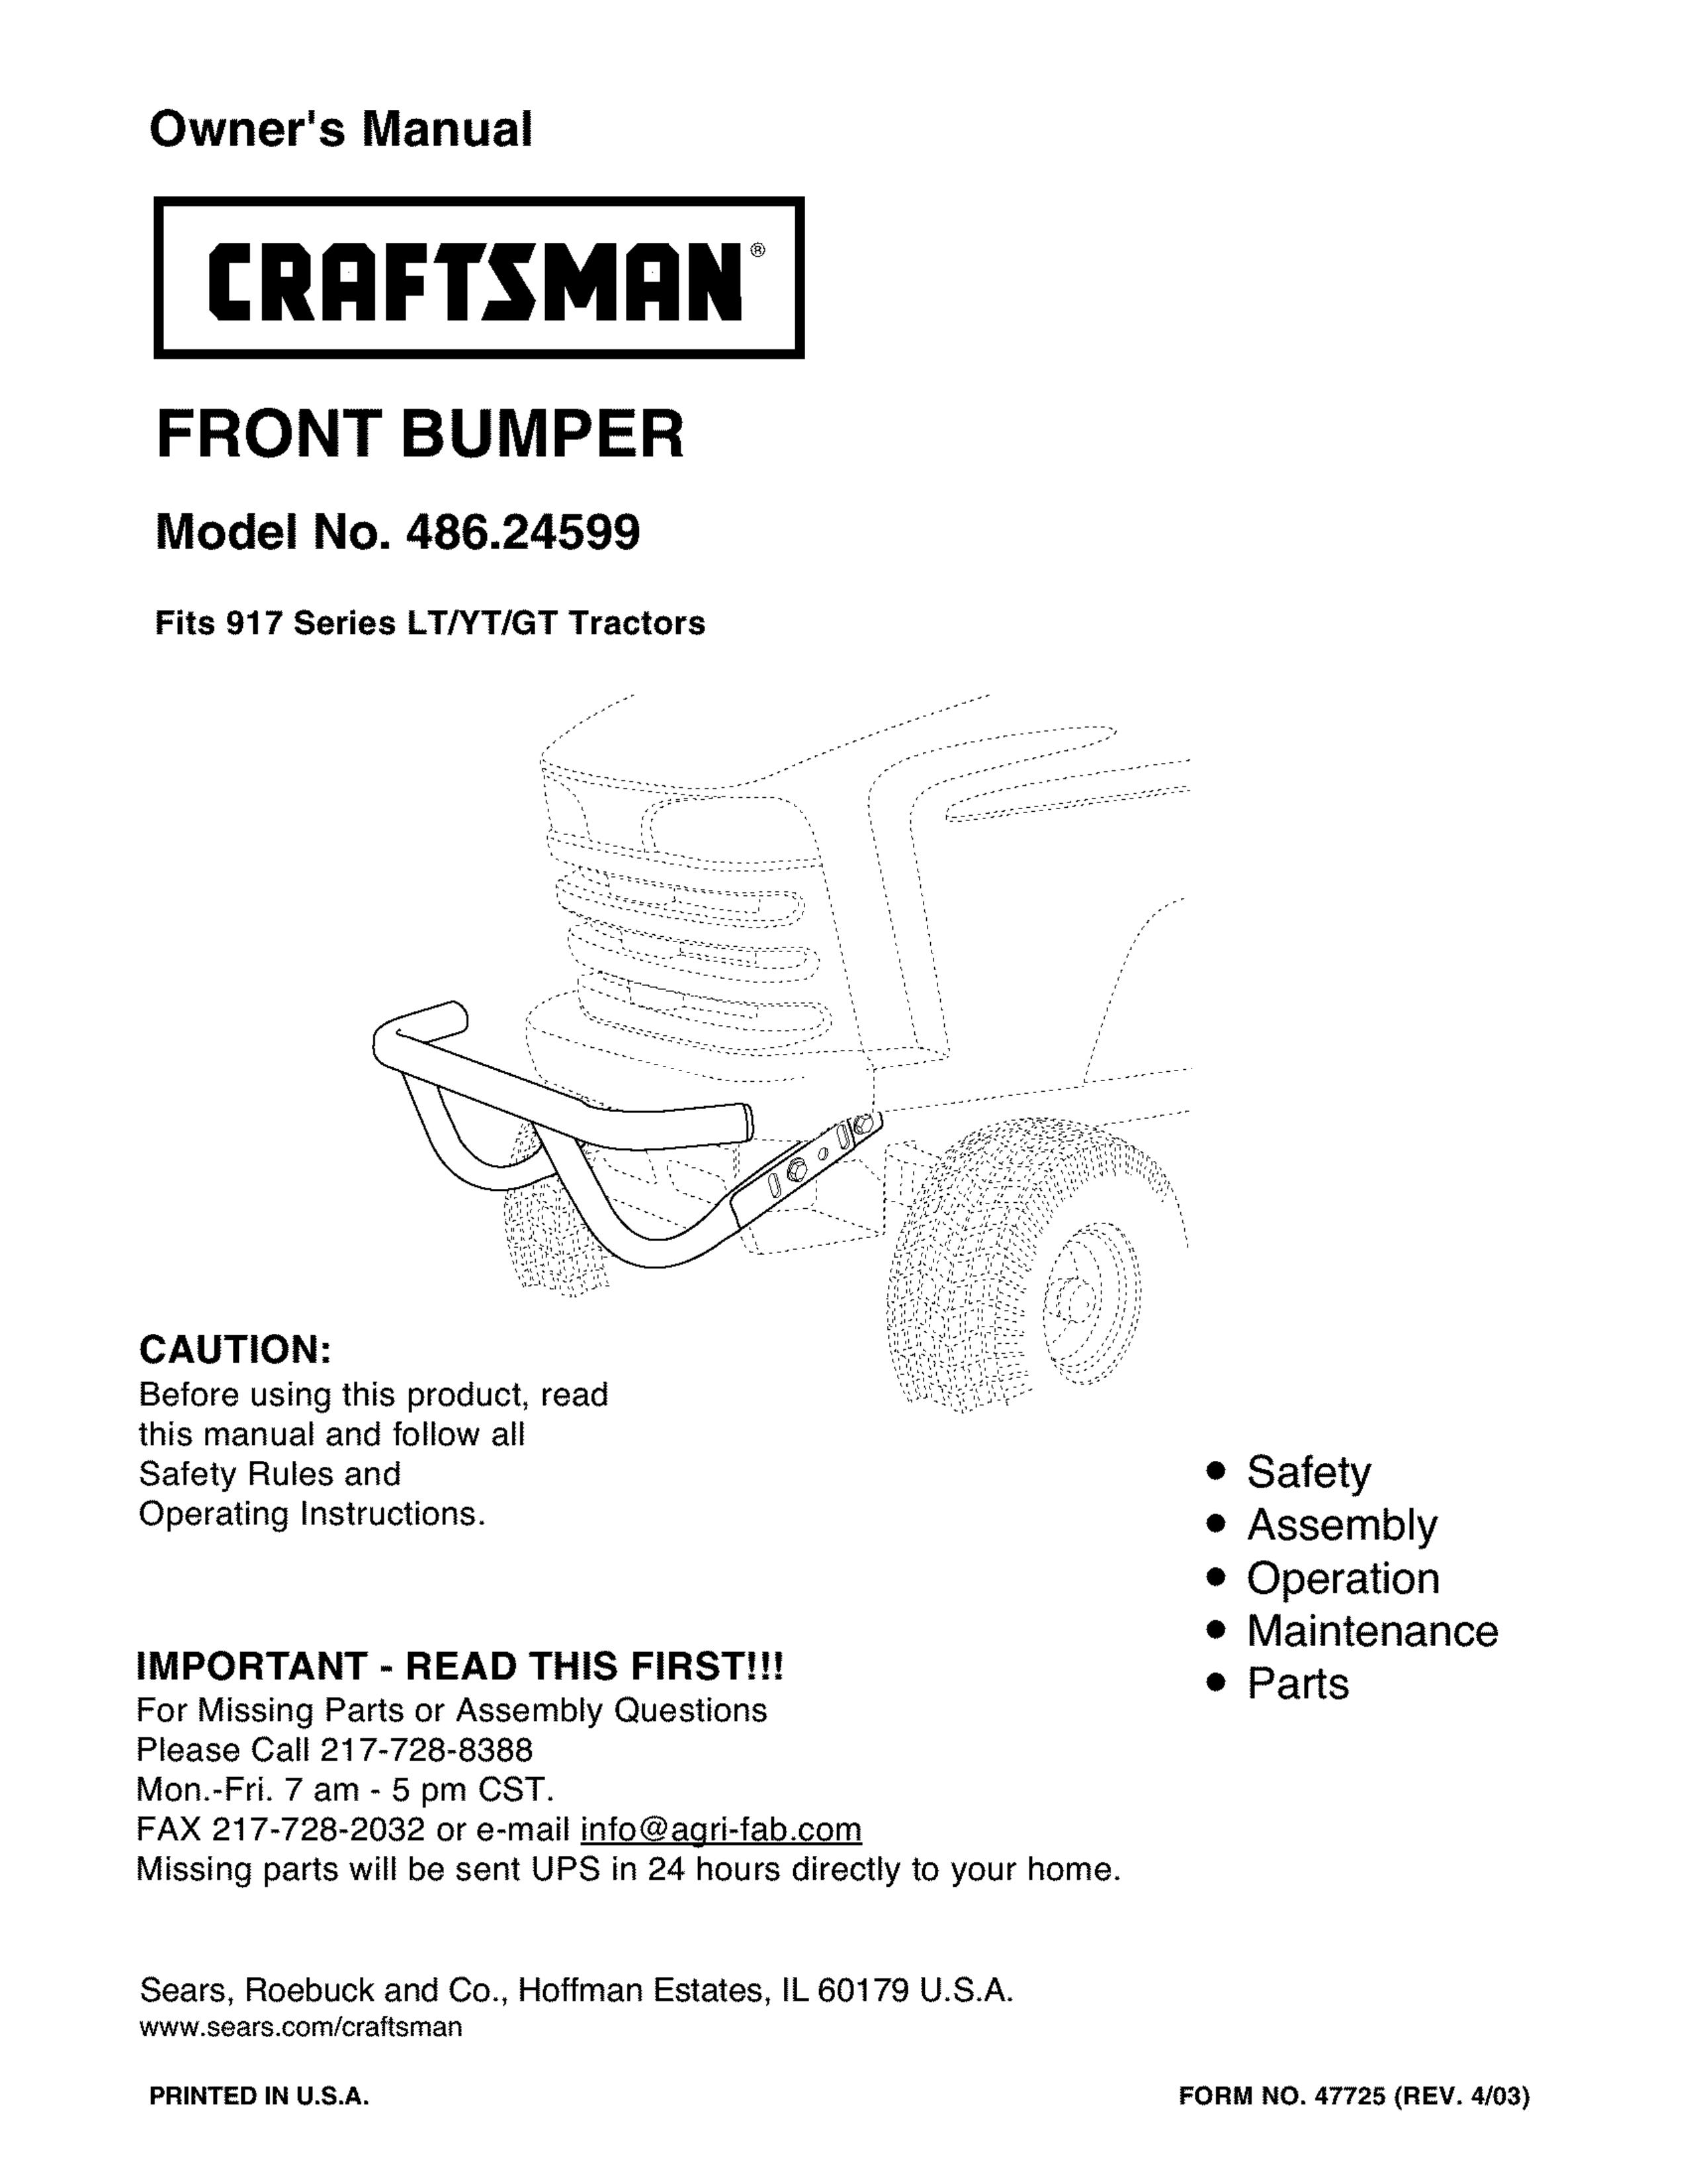 Craftsman 486.24599 Lawn Mower Accessory User Manual